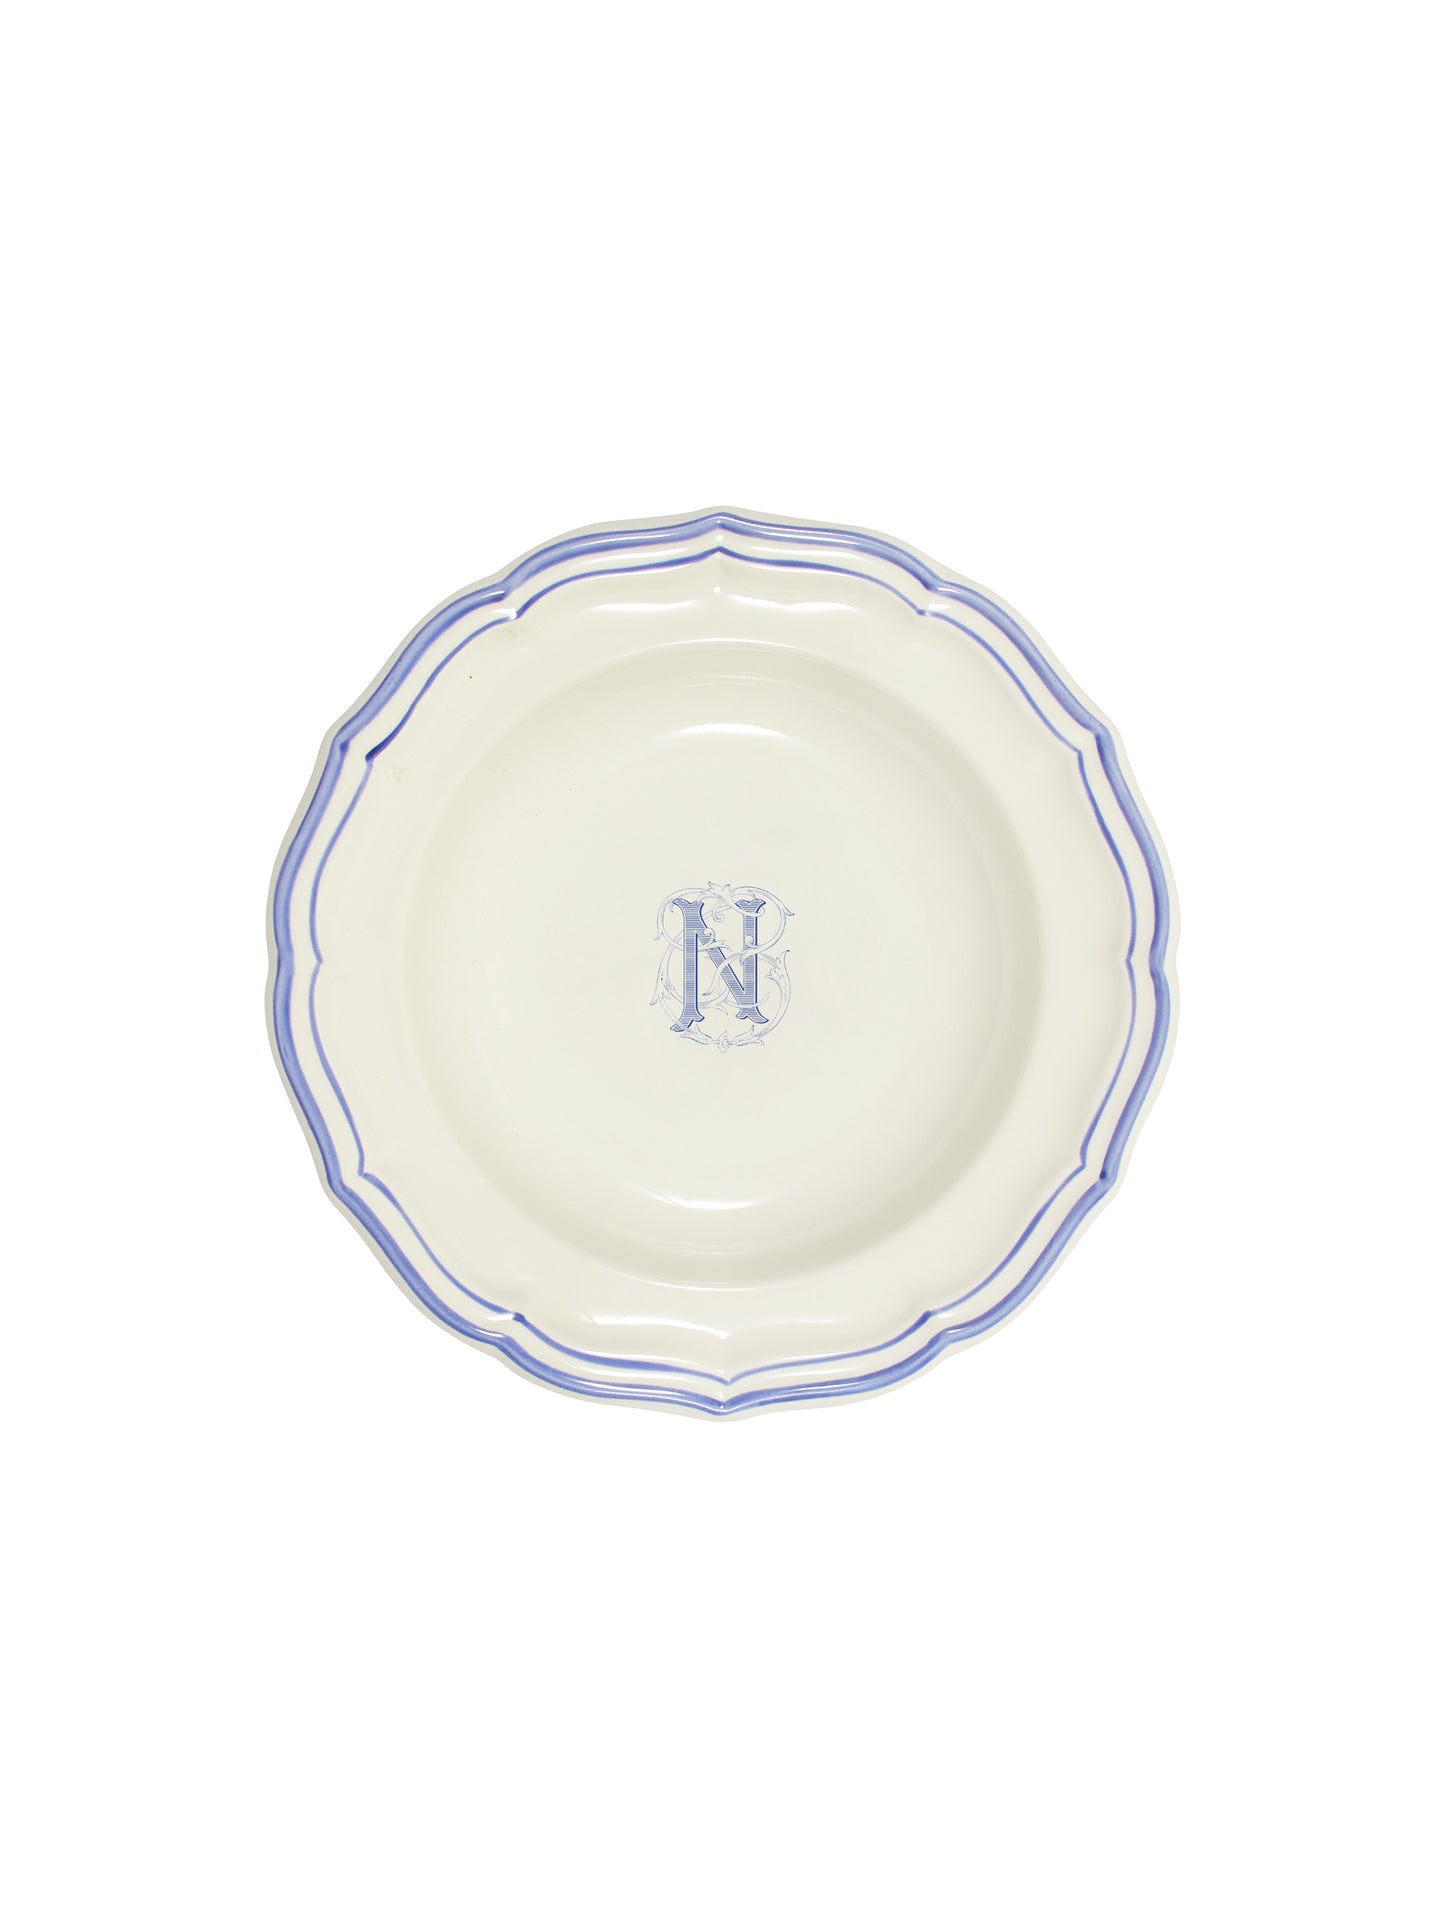 Gien Filet Bleu Monogram Soup Plate N Weston Table